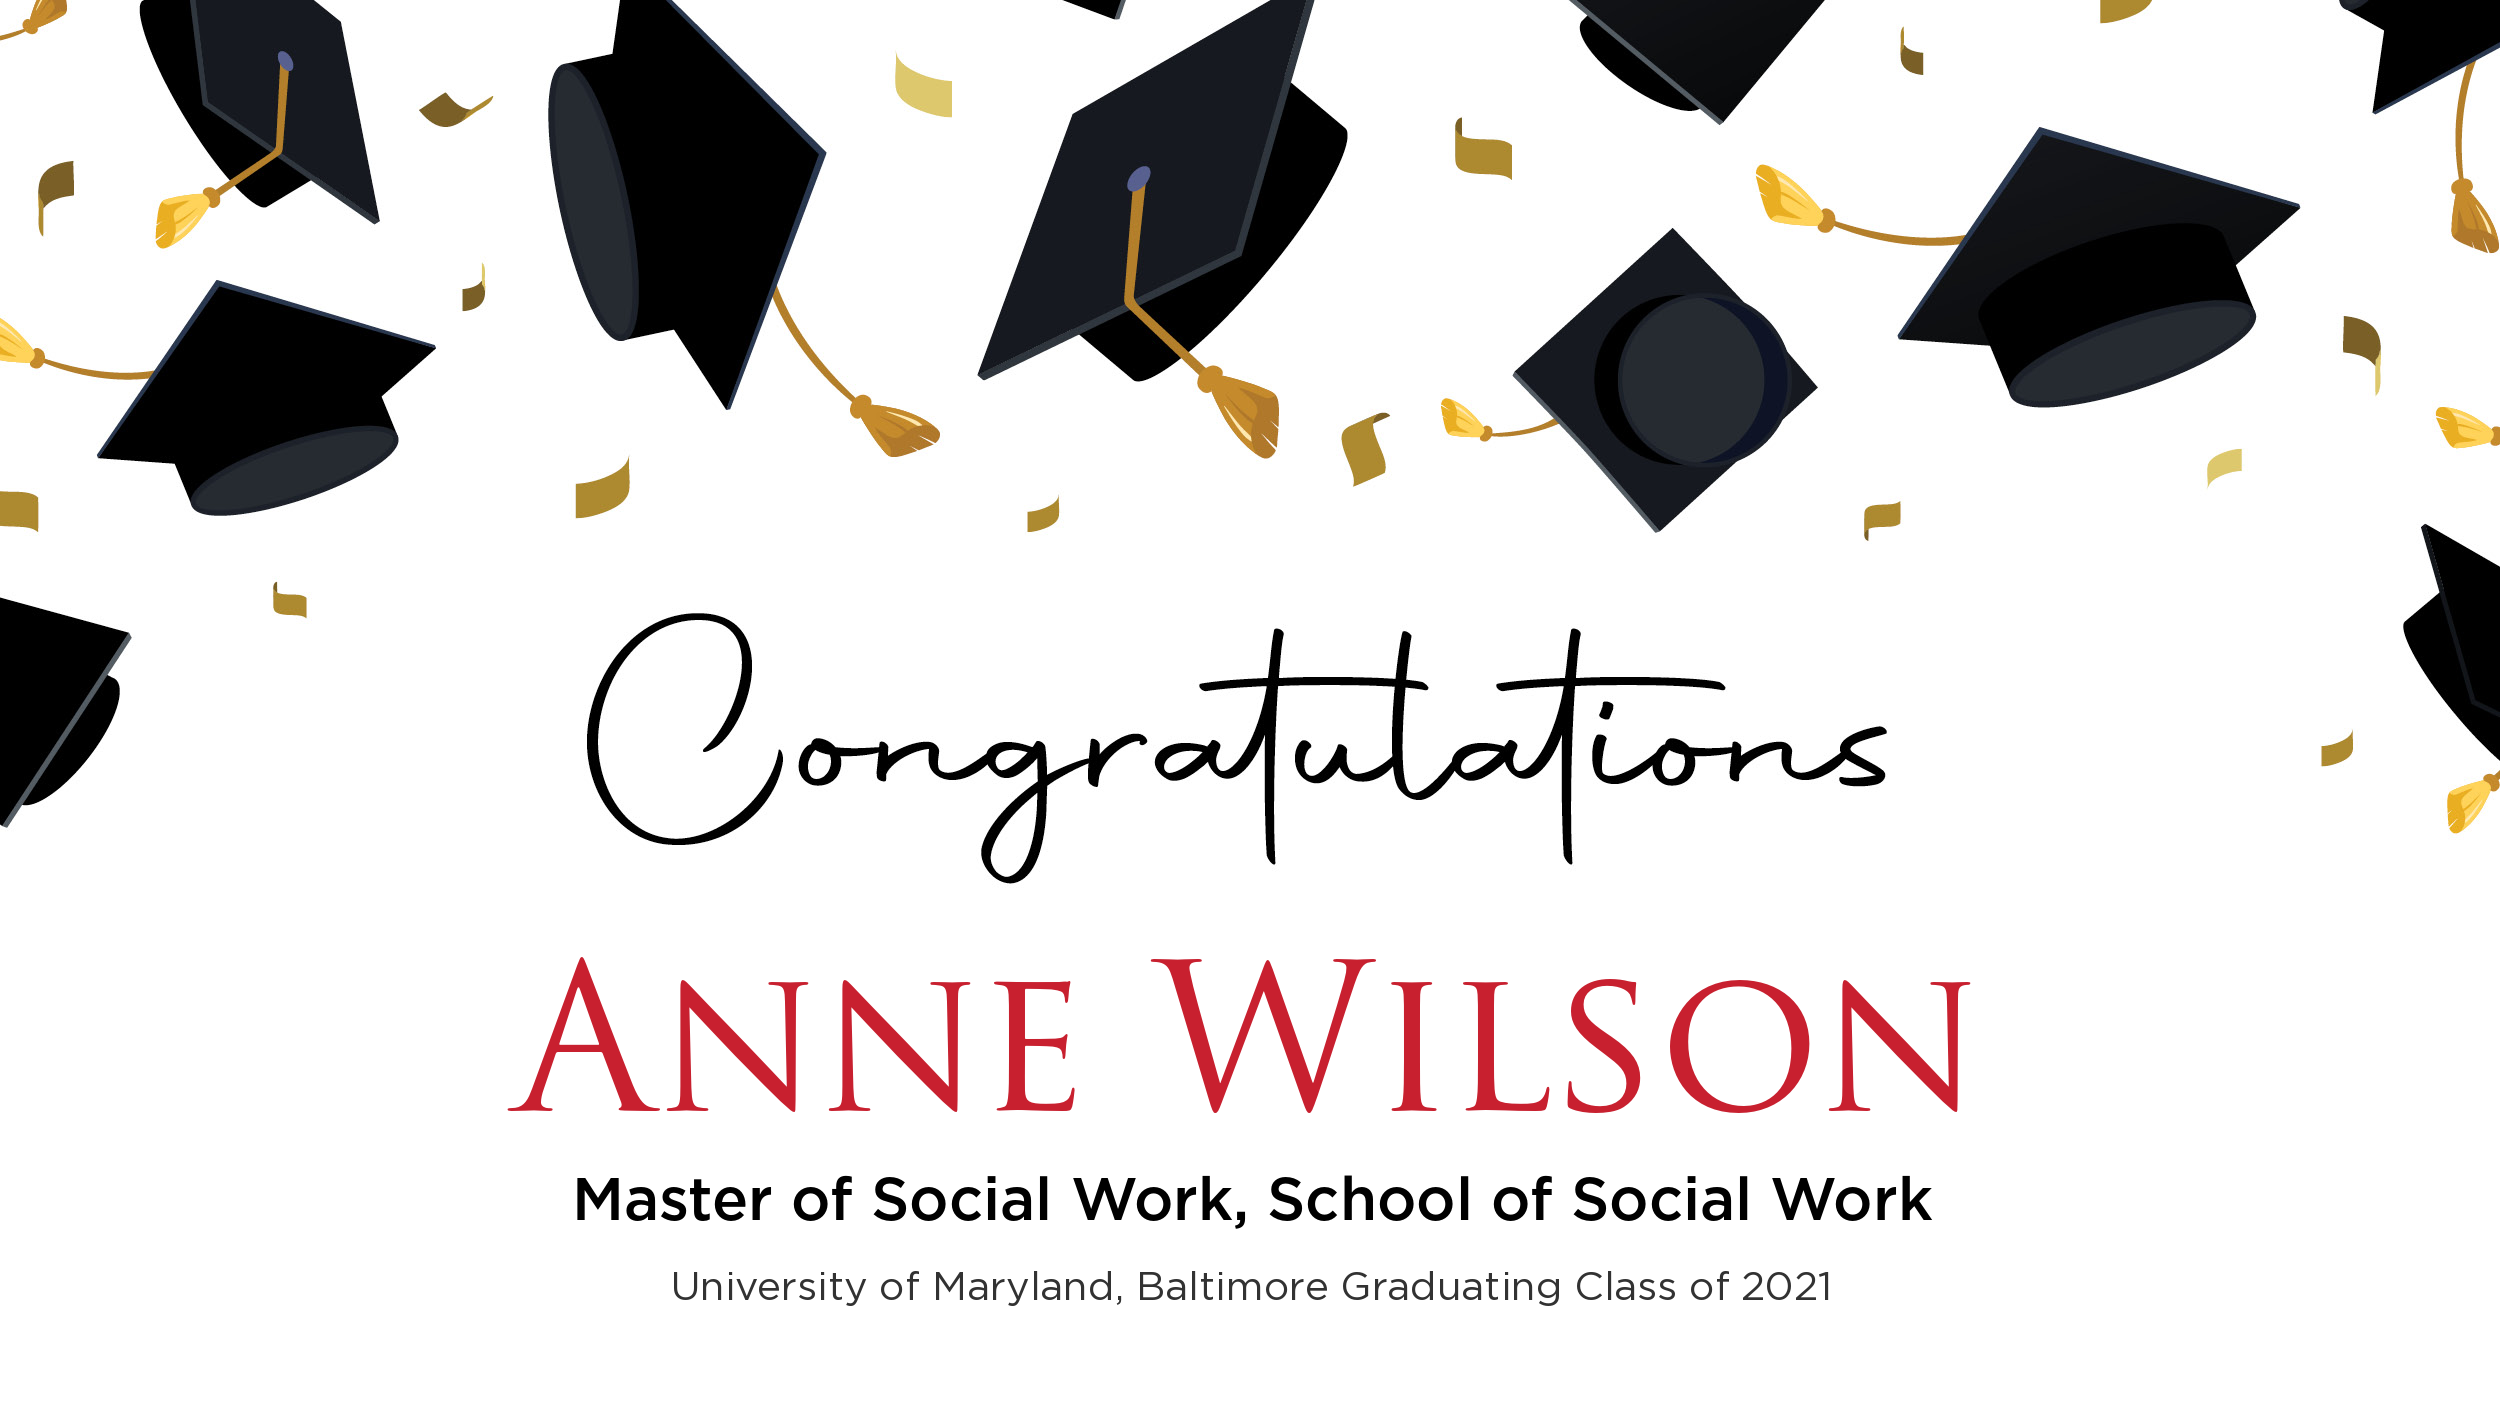 Congratulations Anne Wilson, Master of Social Work